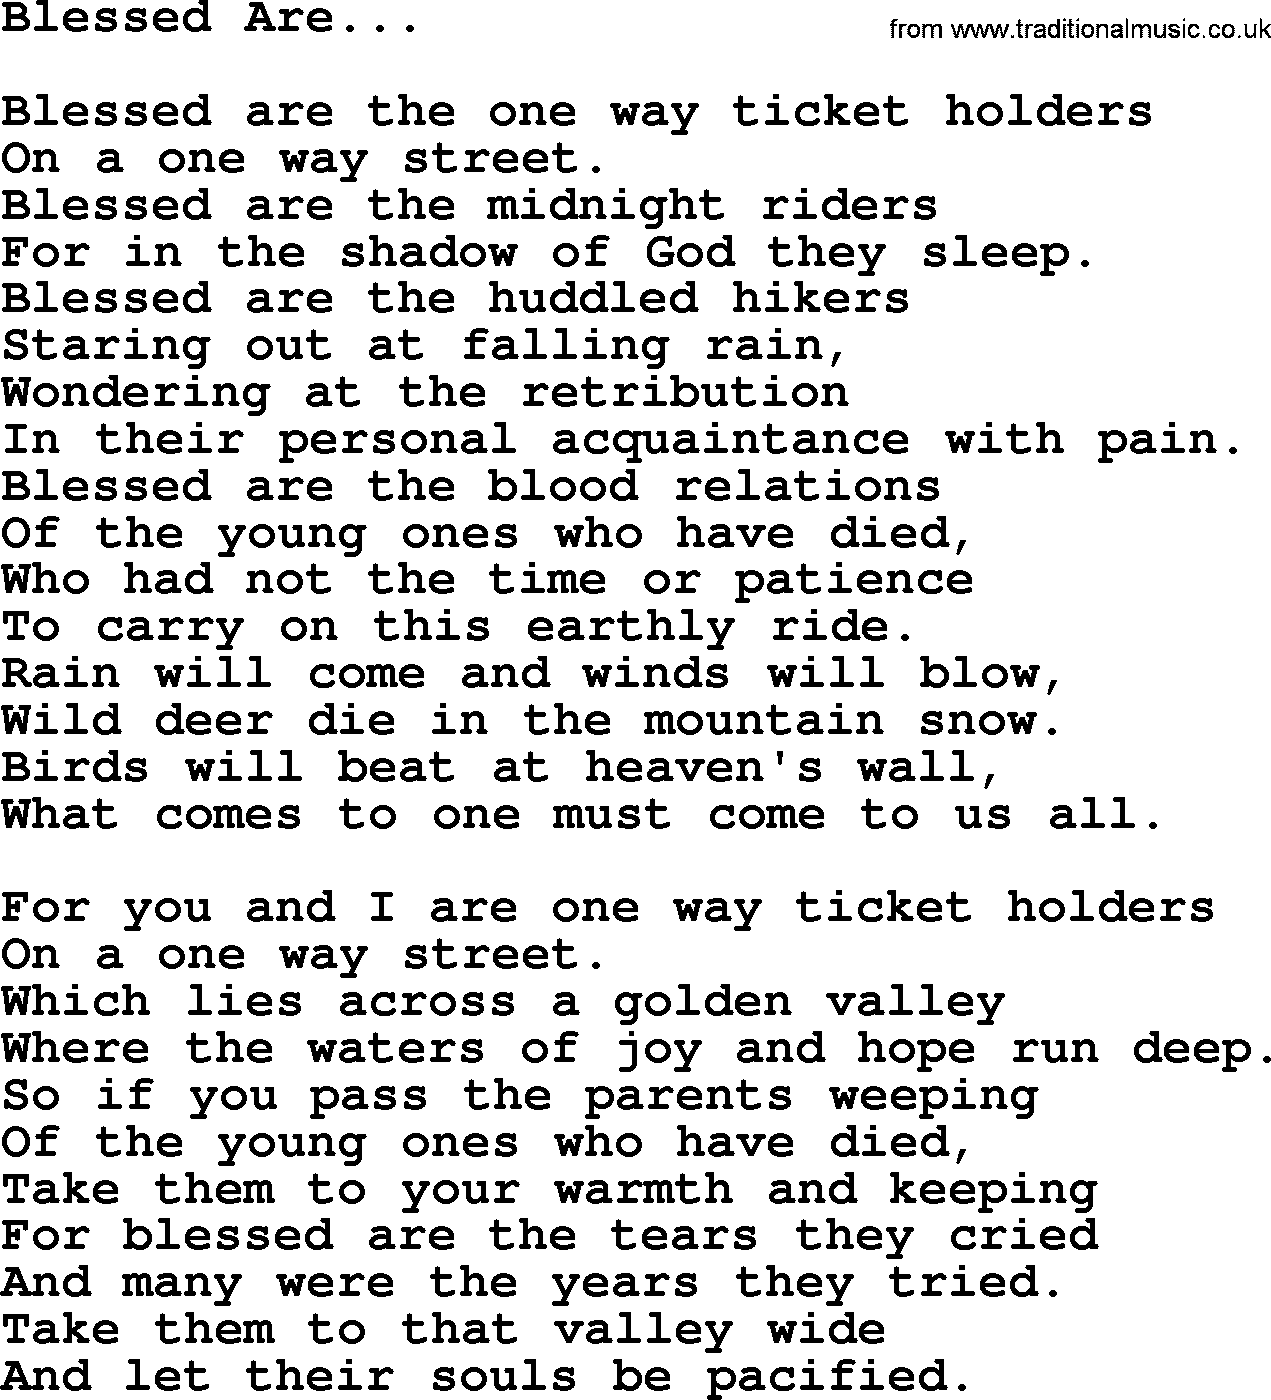 Joan Baez song Blessed Are..., lyrics